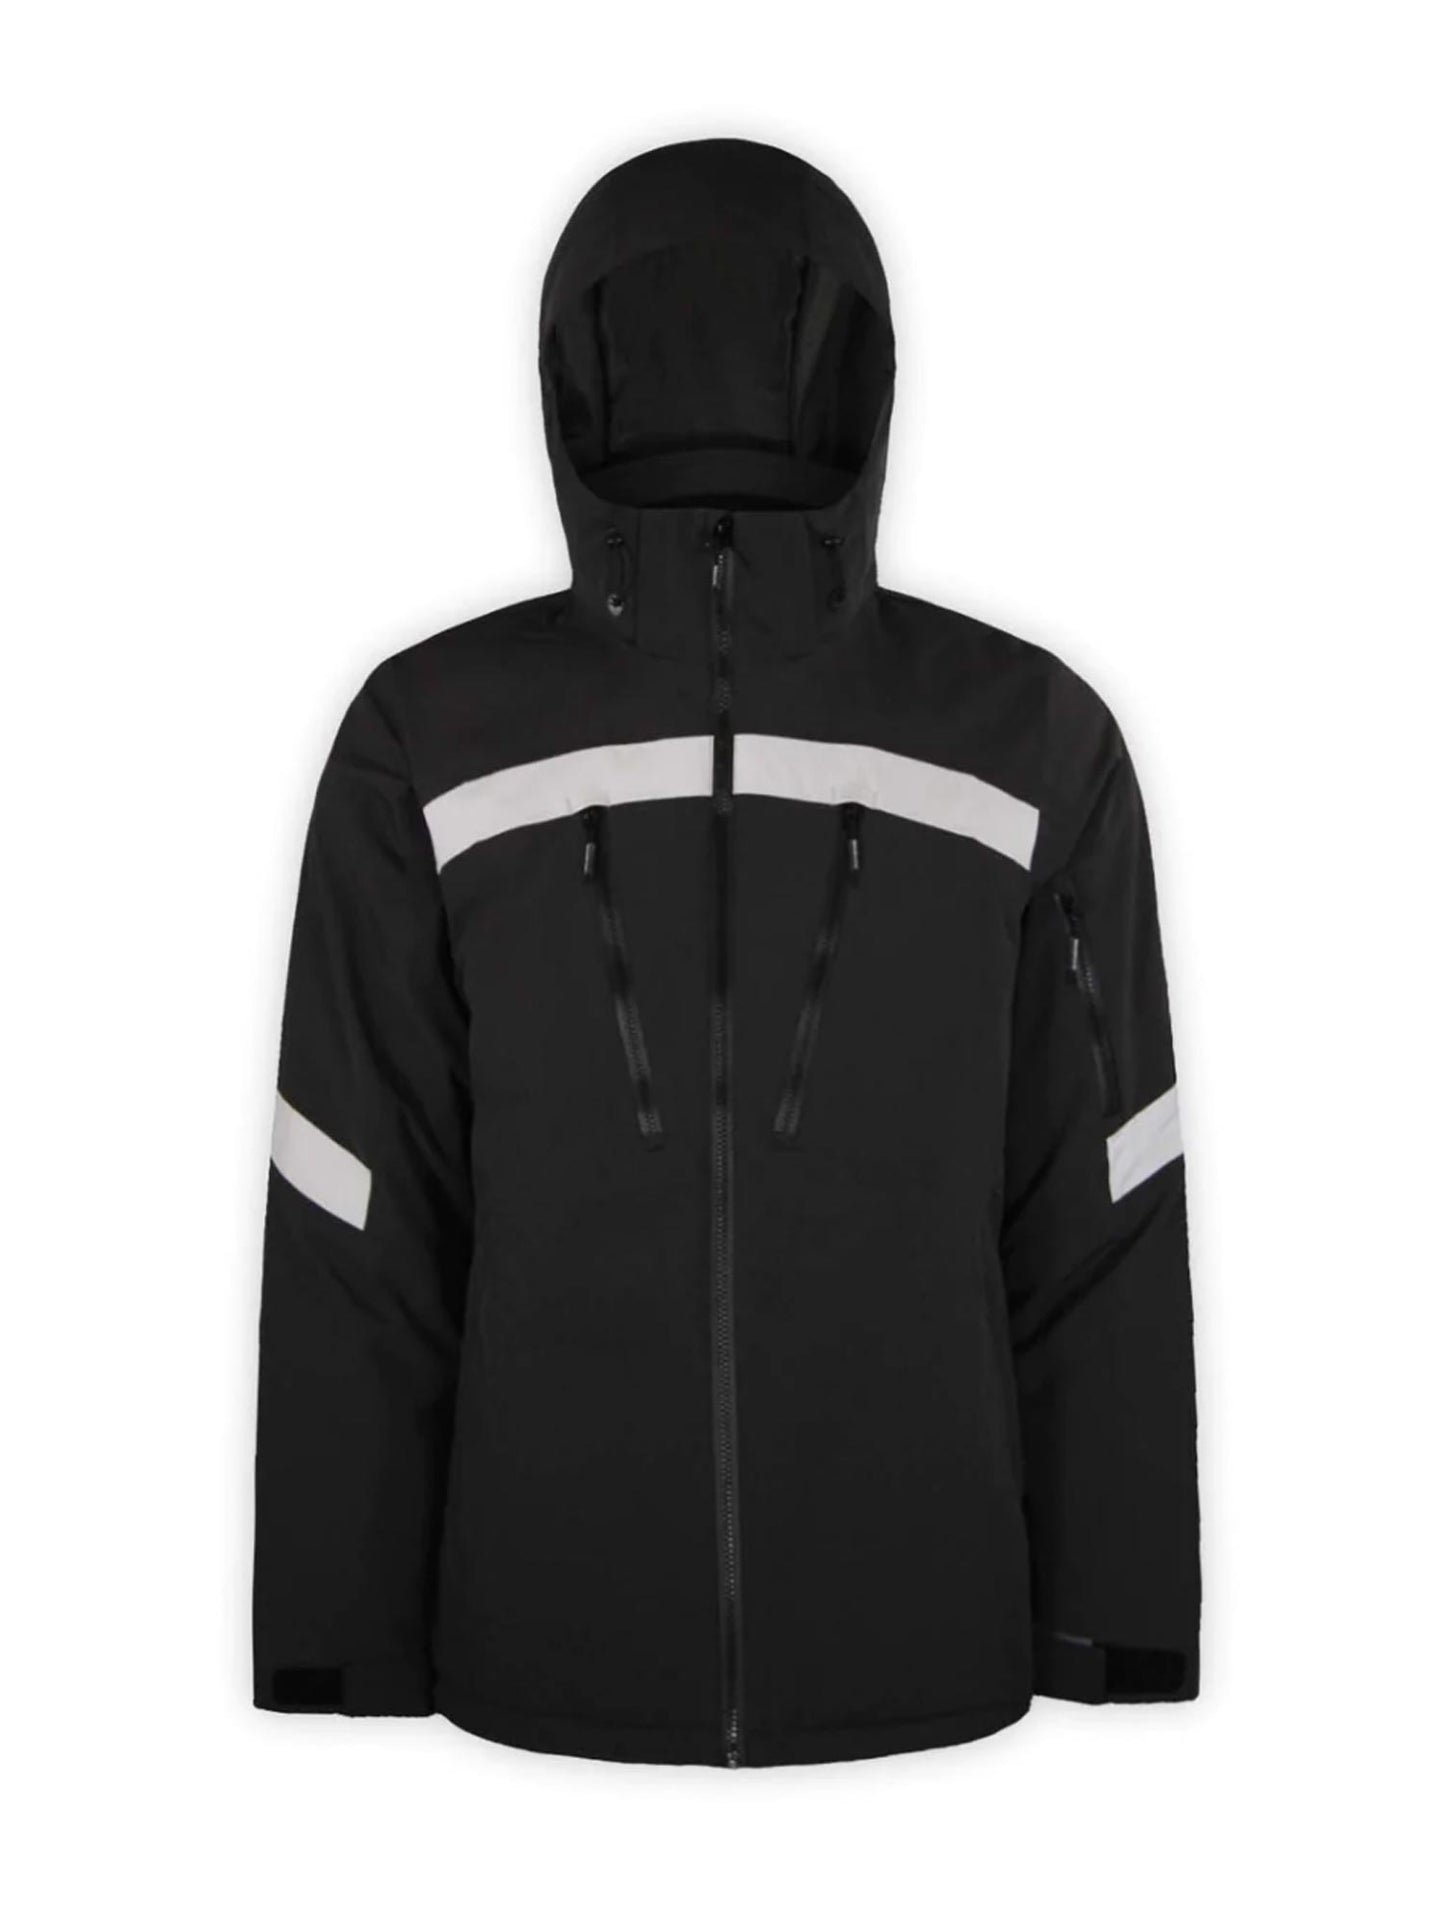 men's Boulder Gear Hyper Tech ski jacket, black